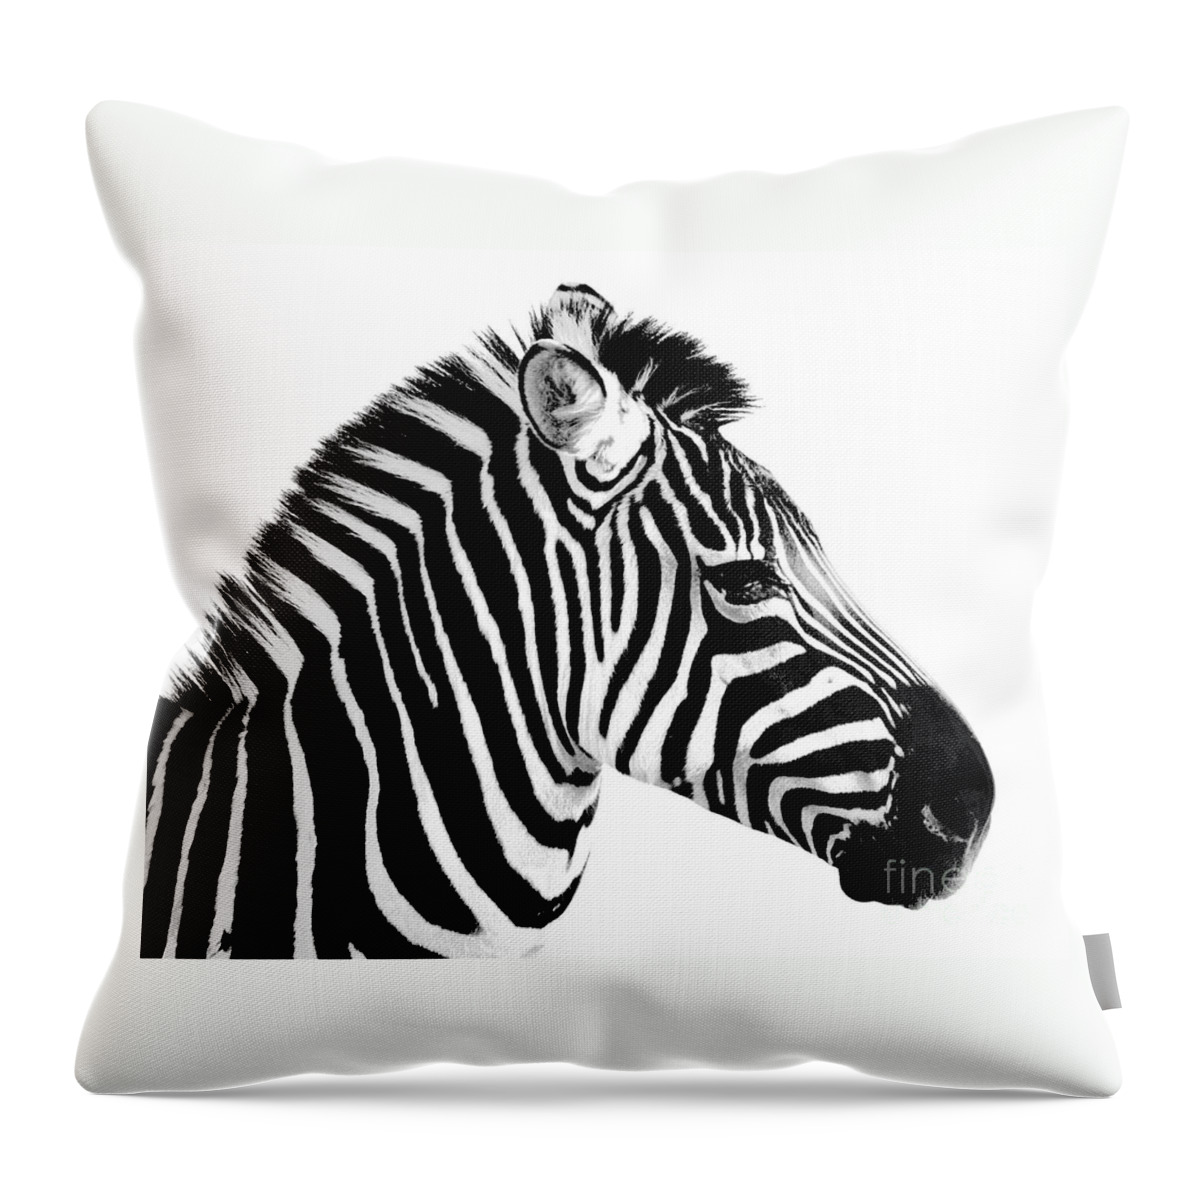 Zebra Throw Pillow featuring the photograph Zebra by Rebecca Margraf